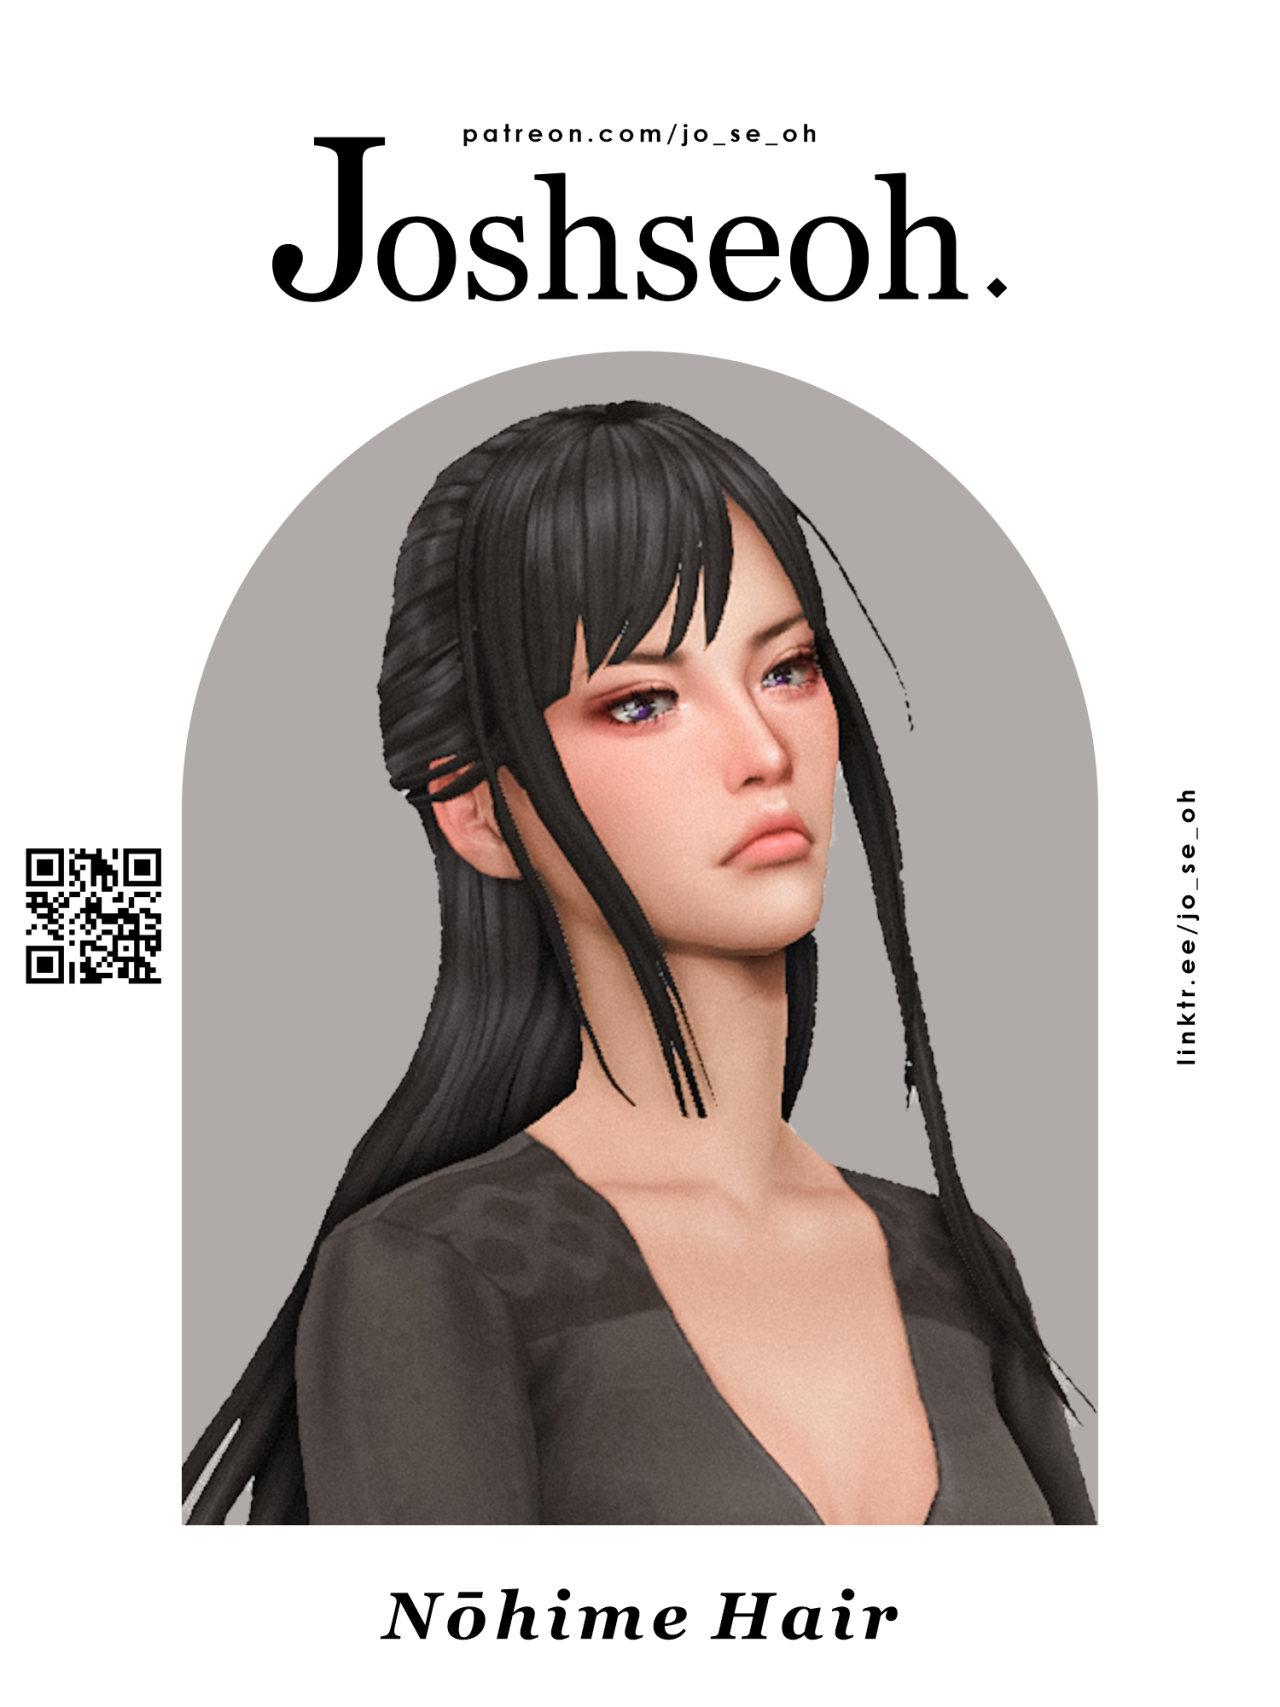 Josh | JoshSeoh : Hair conversions from various games